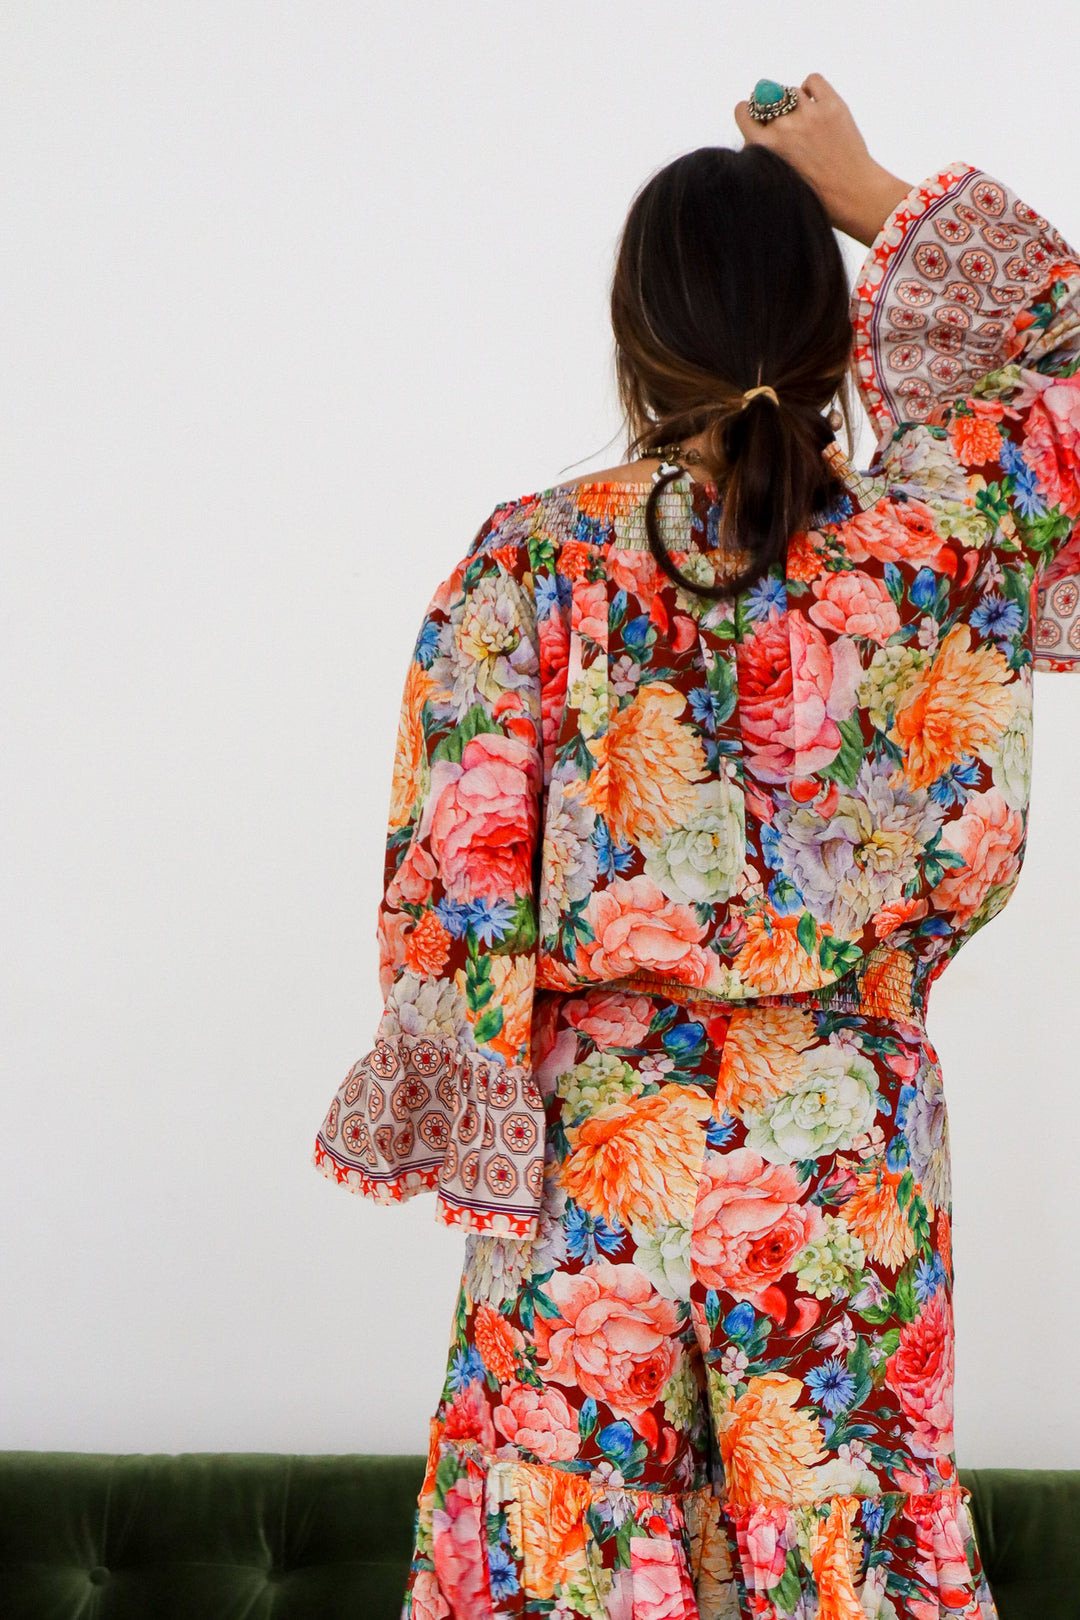 Sale - She's a Flower Bell Sleeve Top by Aratta